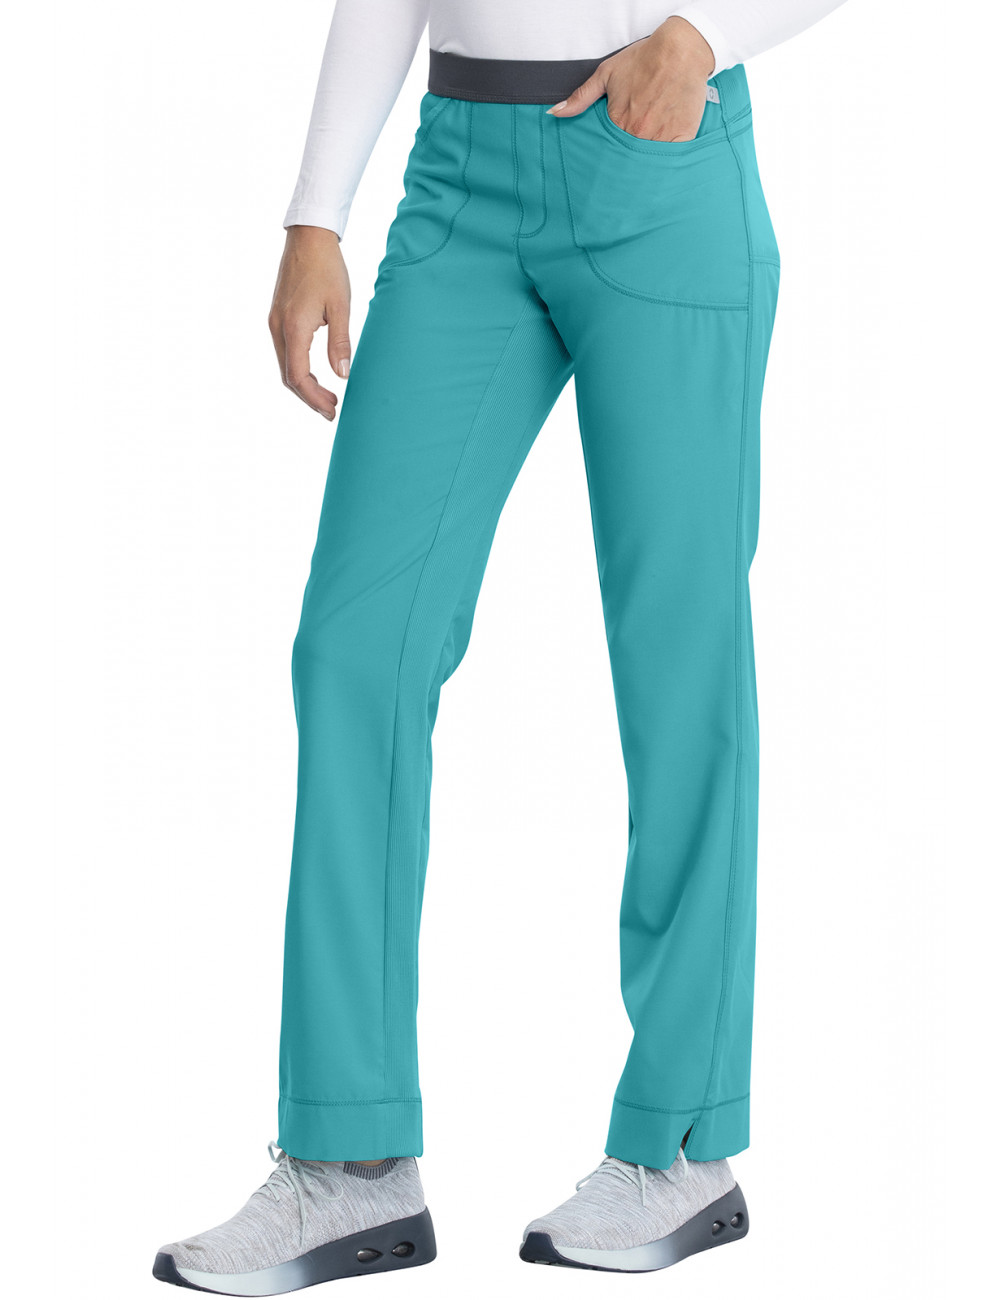 Tosse - Pantalon slim médical - Femme - 4 poches - Cherokee